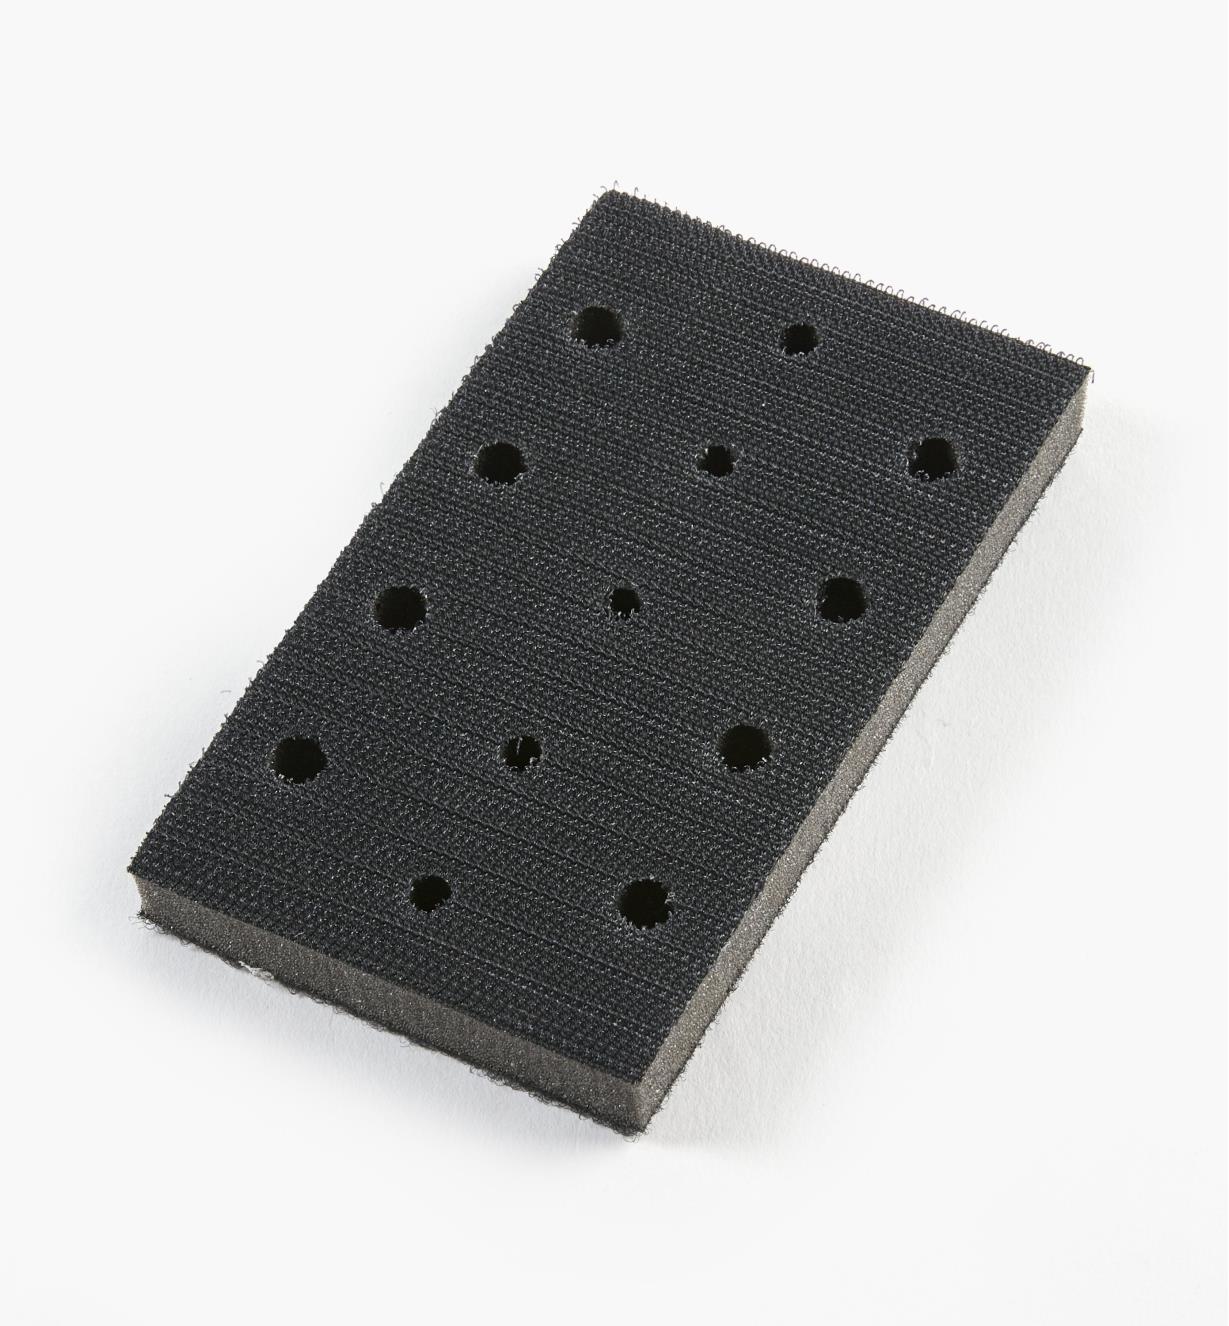 08K3196 - Multi-Hole Grip-Faced Interface Pad